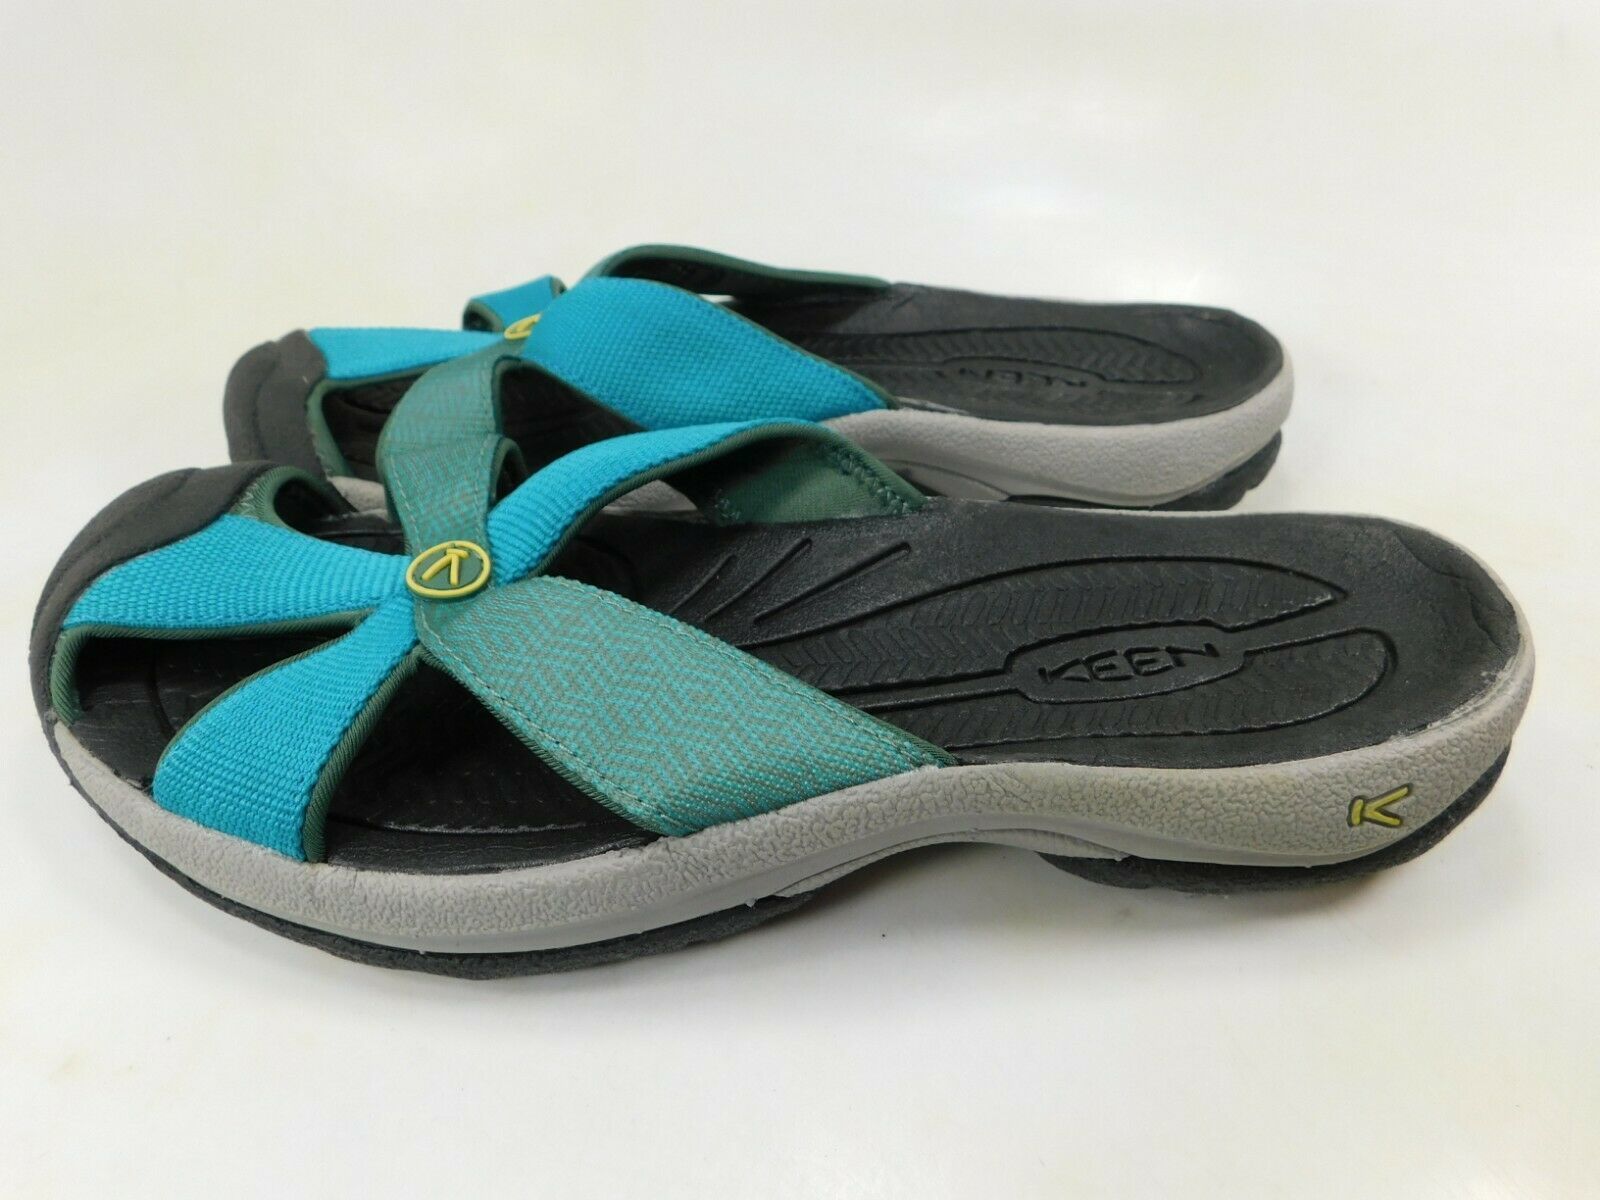 Keen Bali Slide Sz 7 M (B) EU 37.5 Women's Sports Slide Sandals Shoes ...